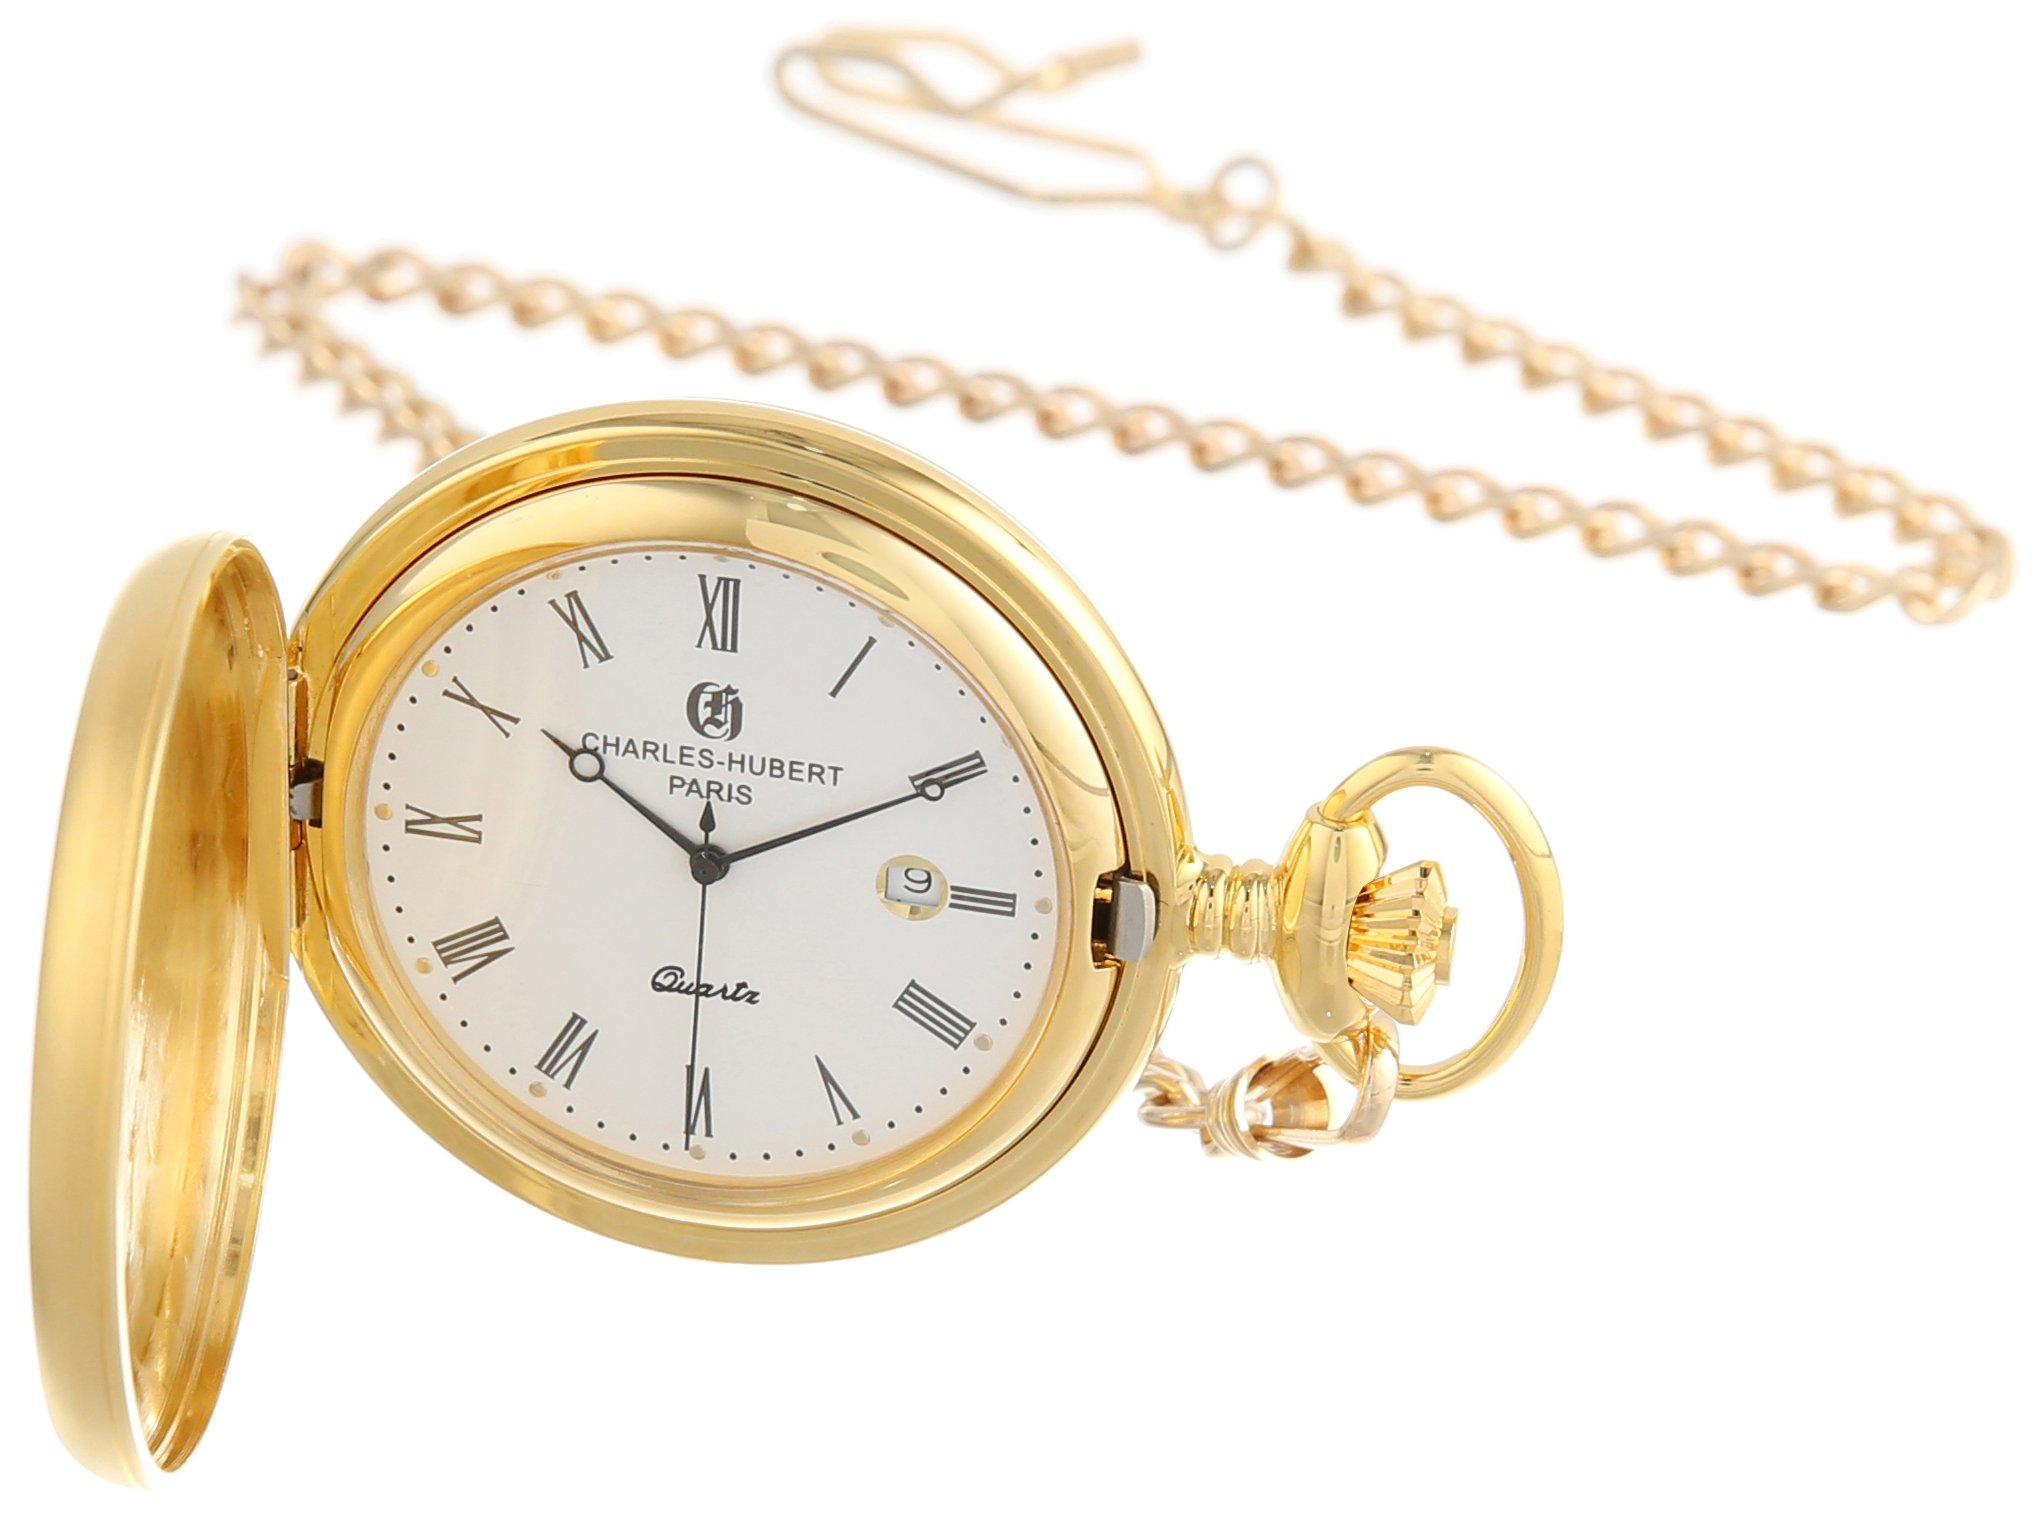 Charles-Hubert, Paris Gold-Plated Quartz Pocket Watch